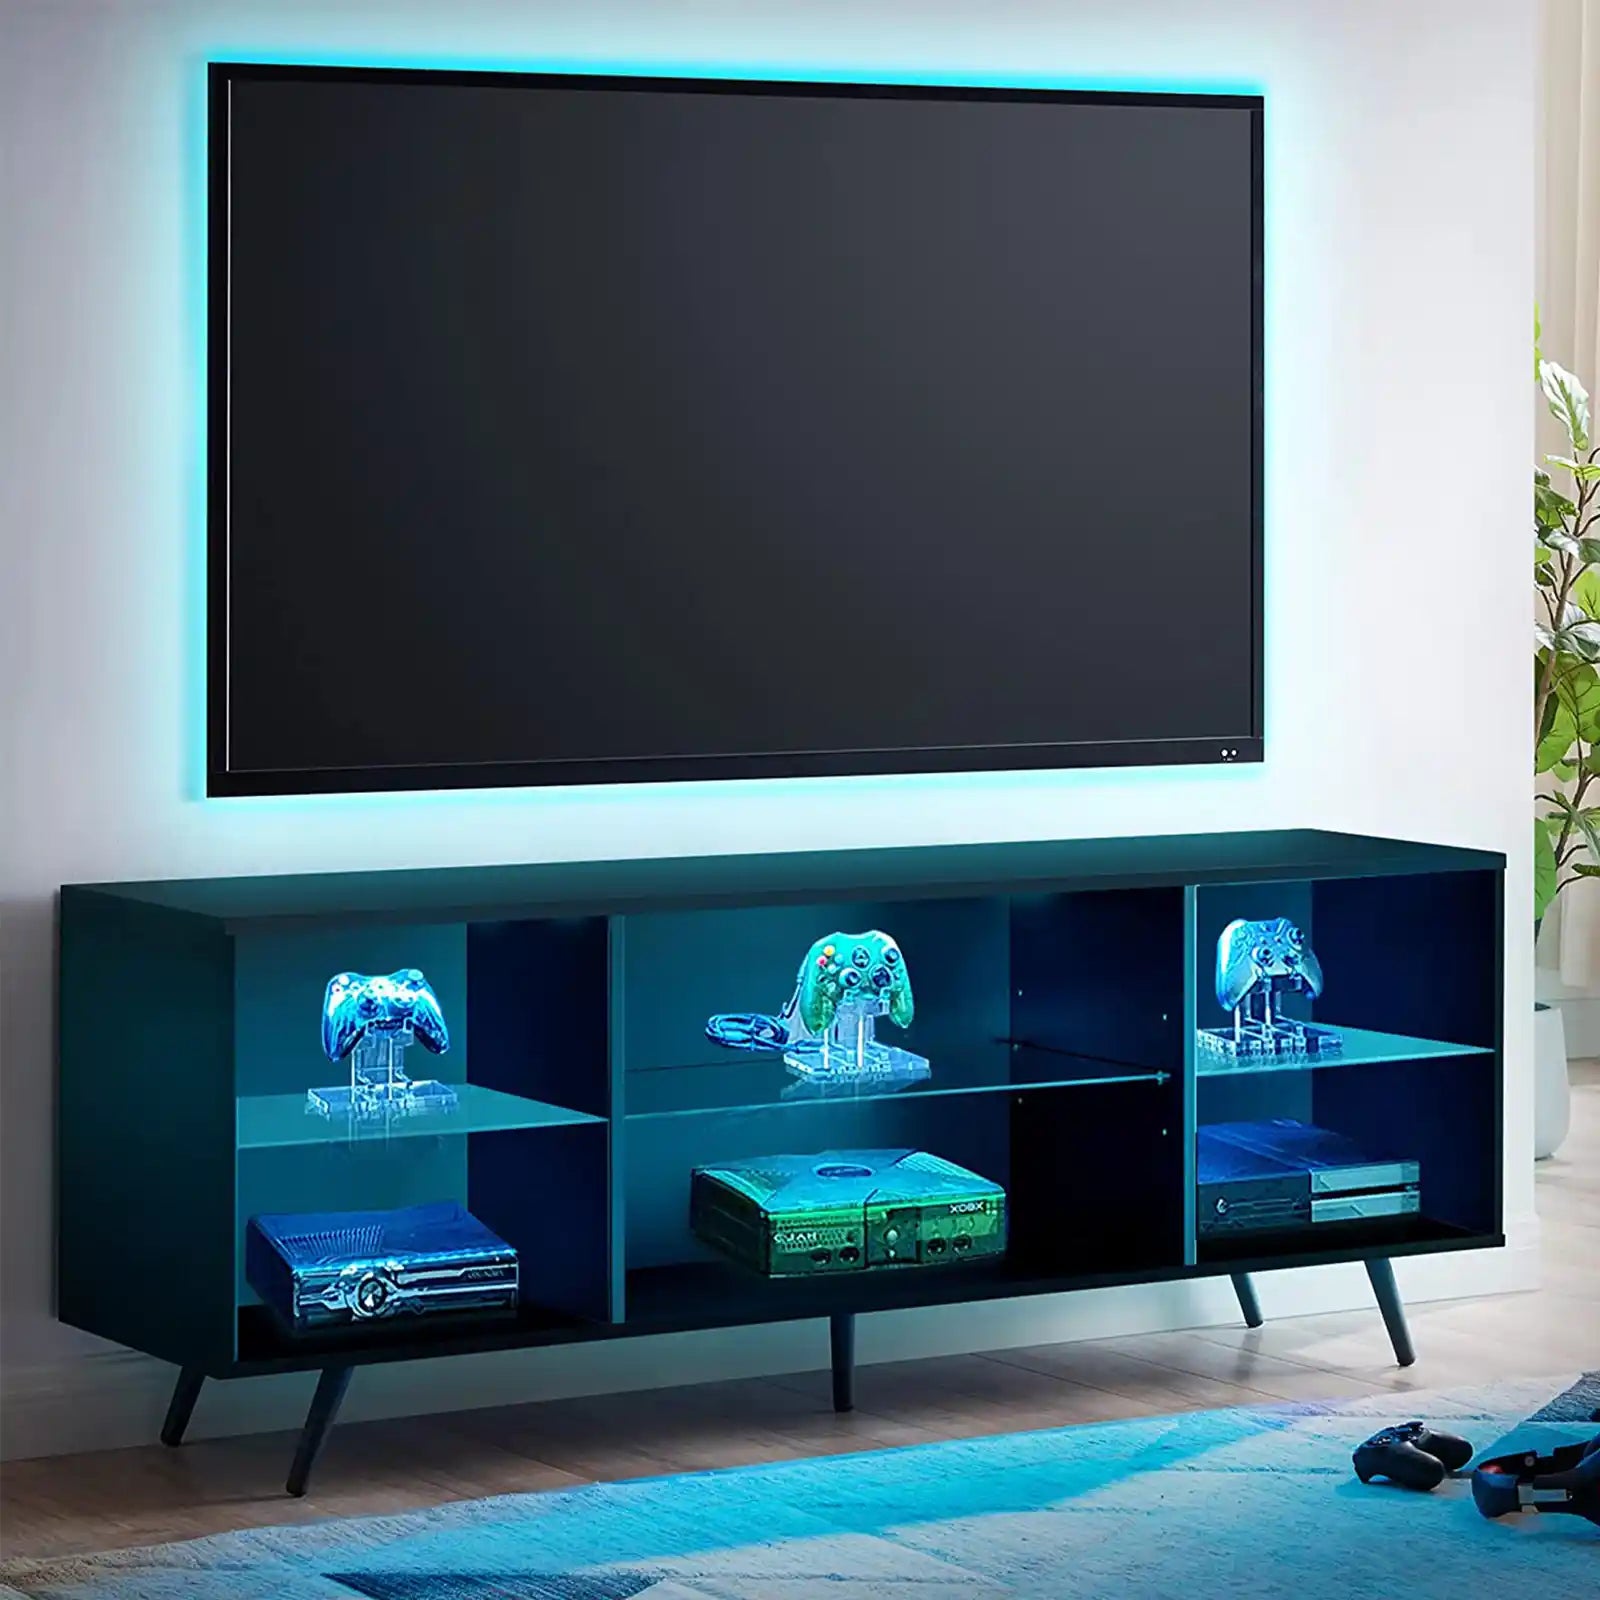 Soporte de TV moderno para TV de 75 pulgadas con luces LED, soportes de televisión para consola multimedia de centro de entretenimiento para juegos